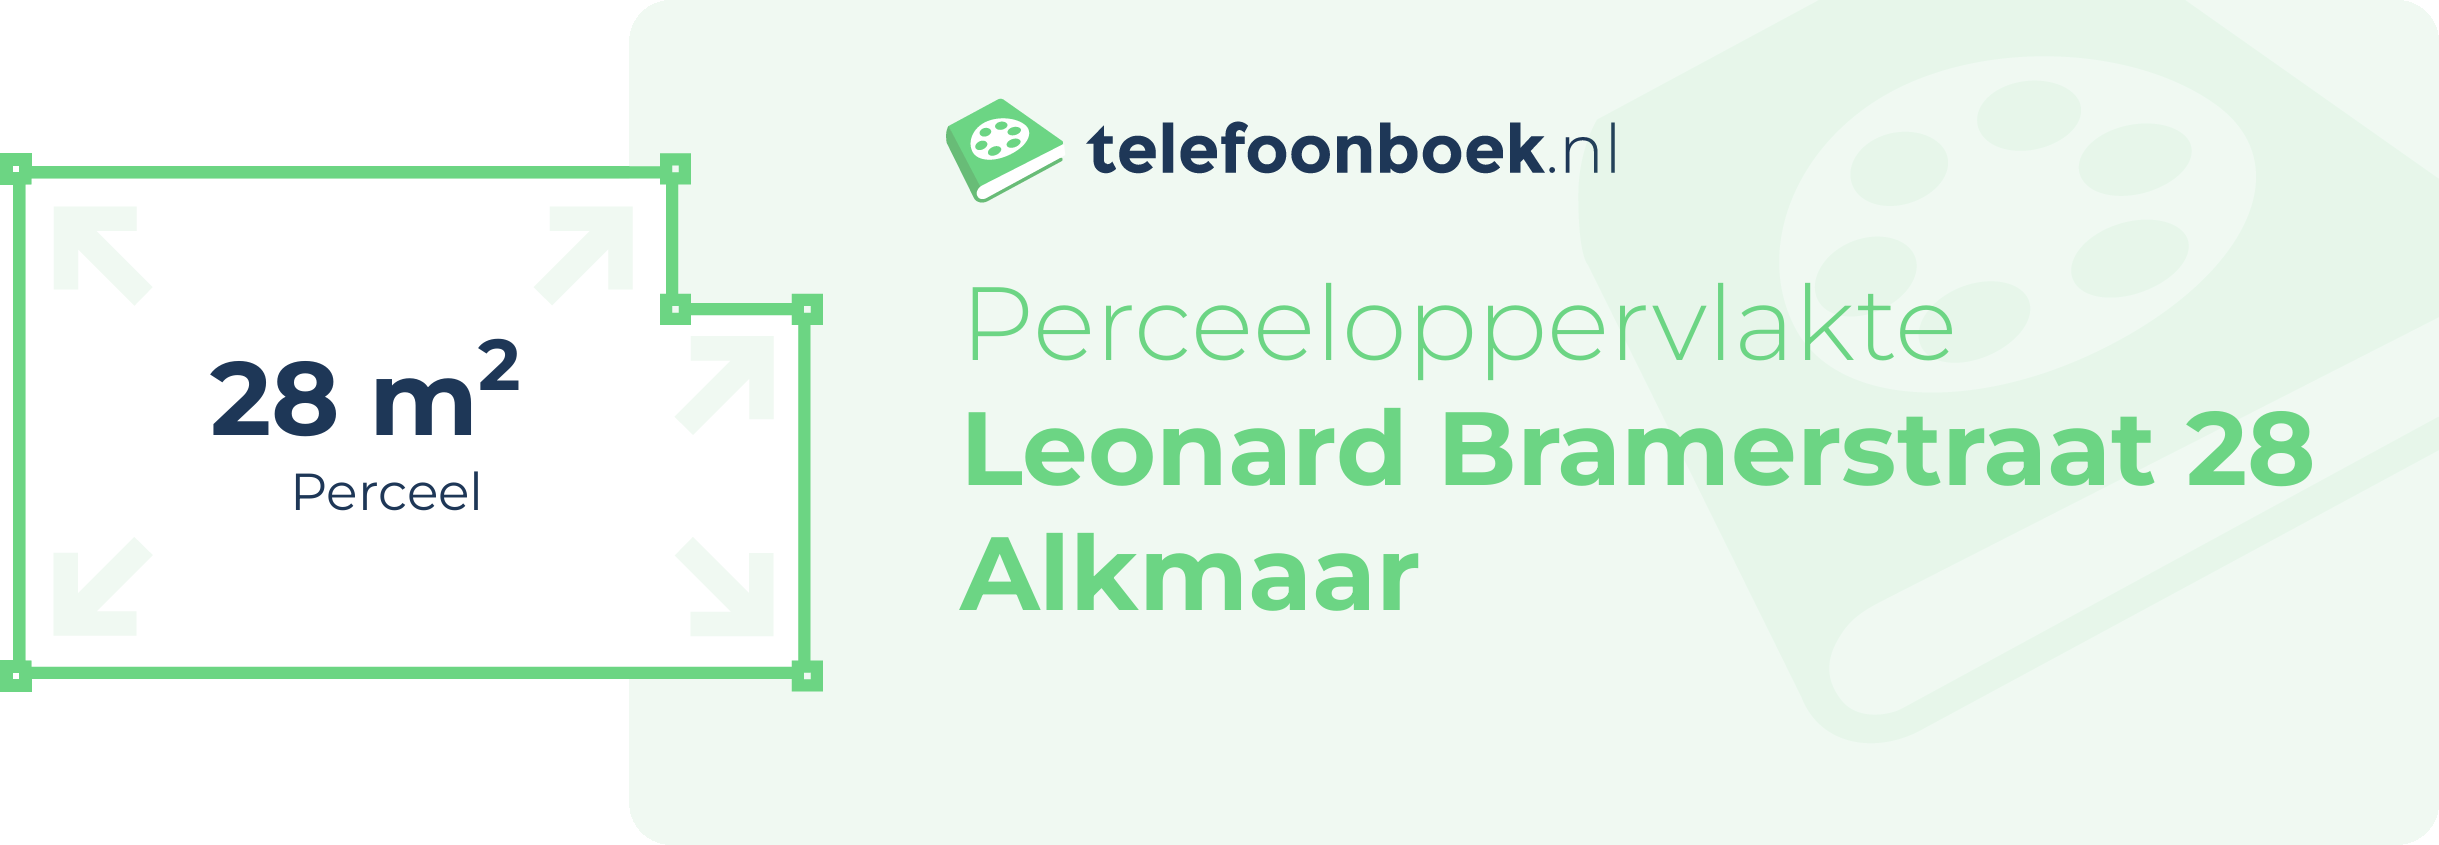 Perceeloppervlakte Leonard Bramerstraat 28 Alkmaar